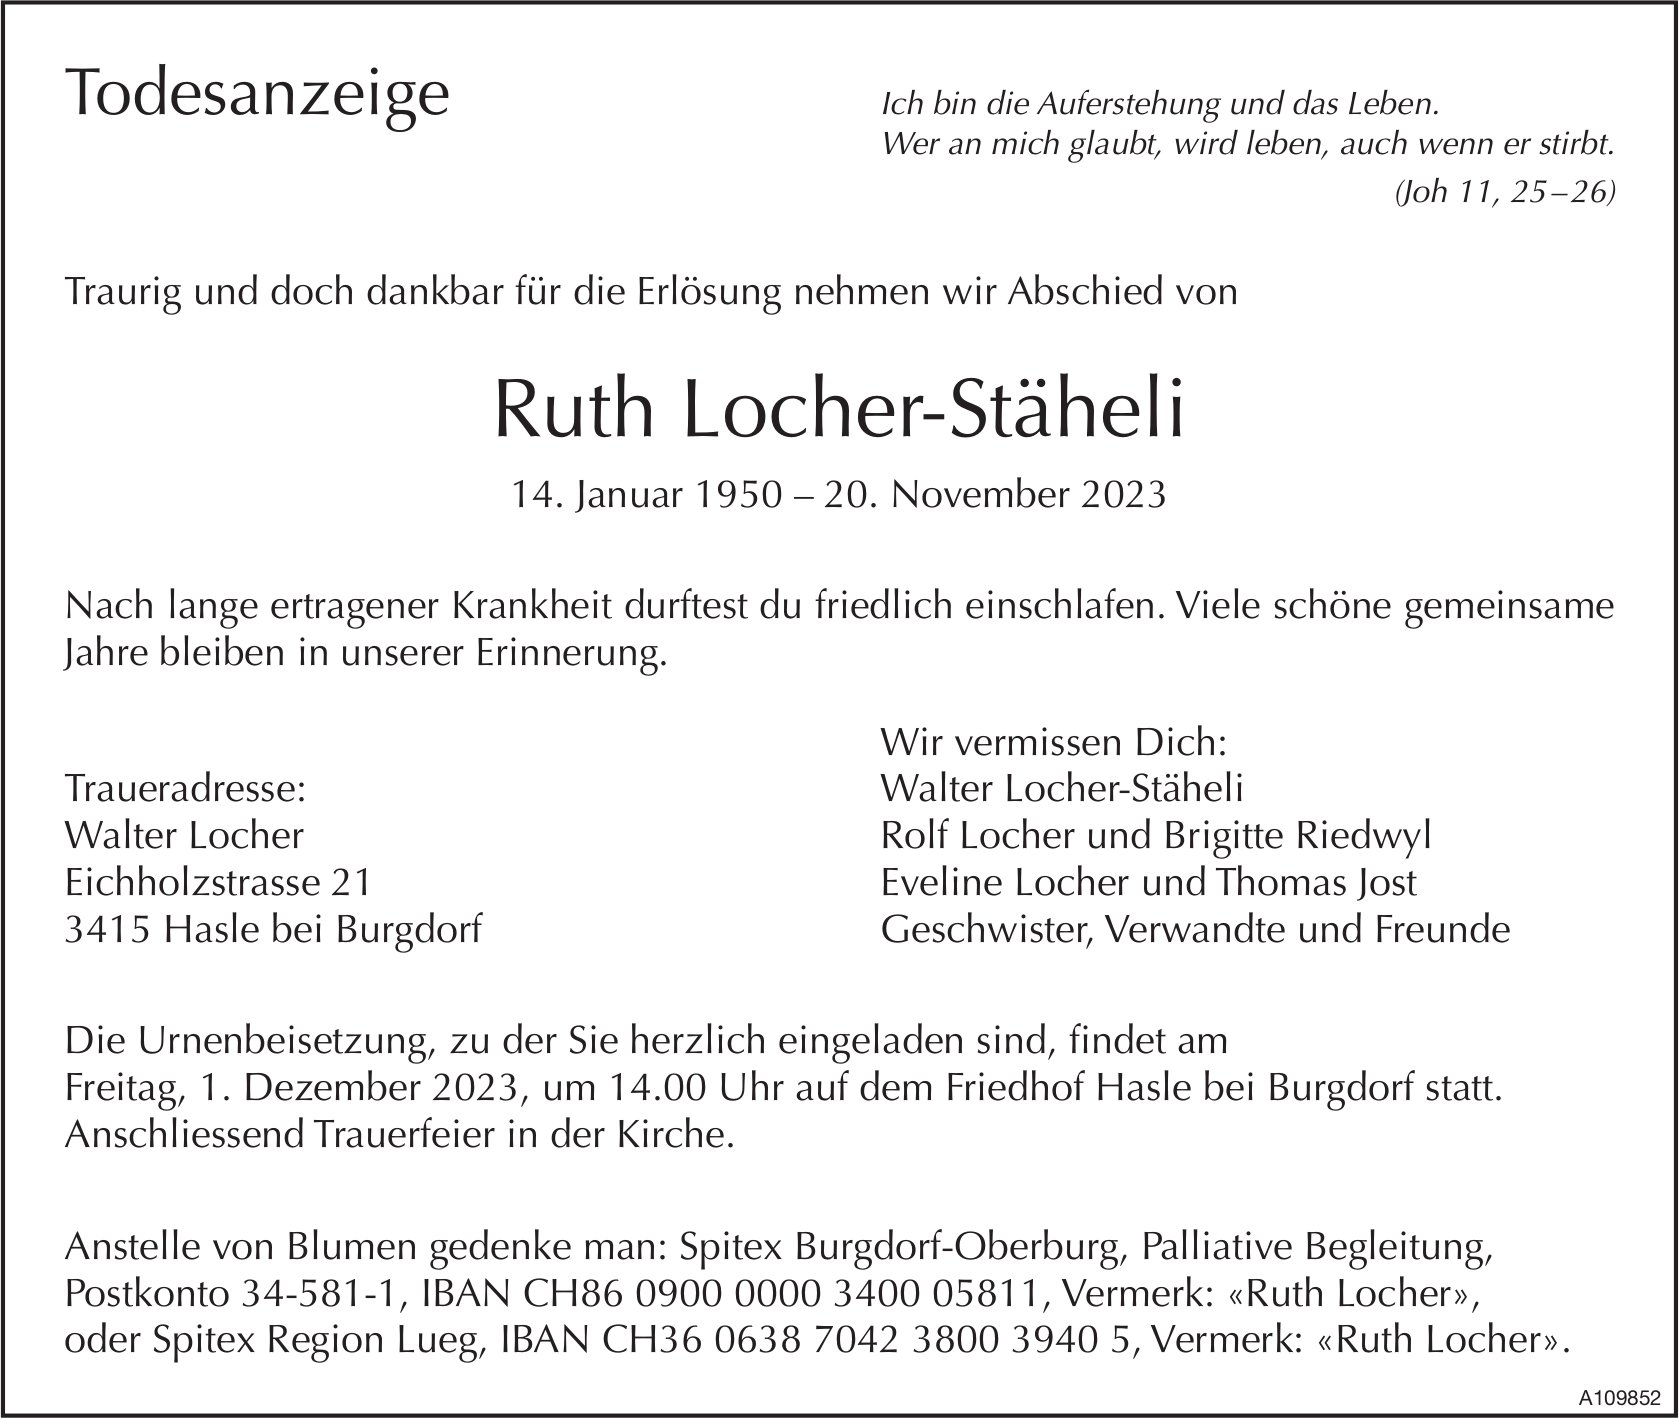 Ruth Locher-Stäheli, November 2023 / TA